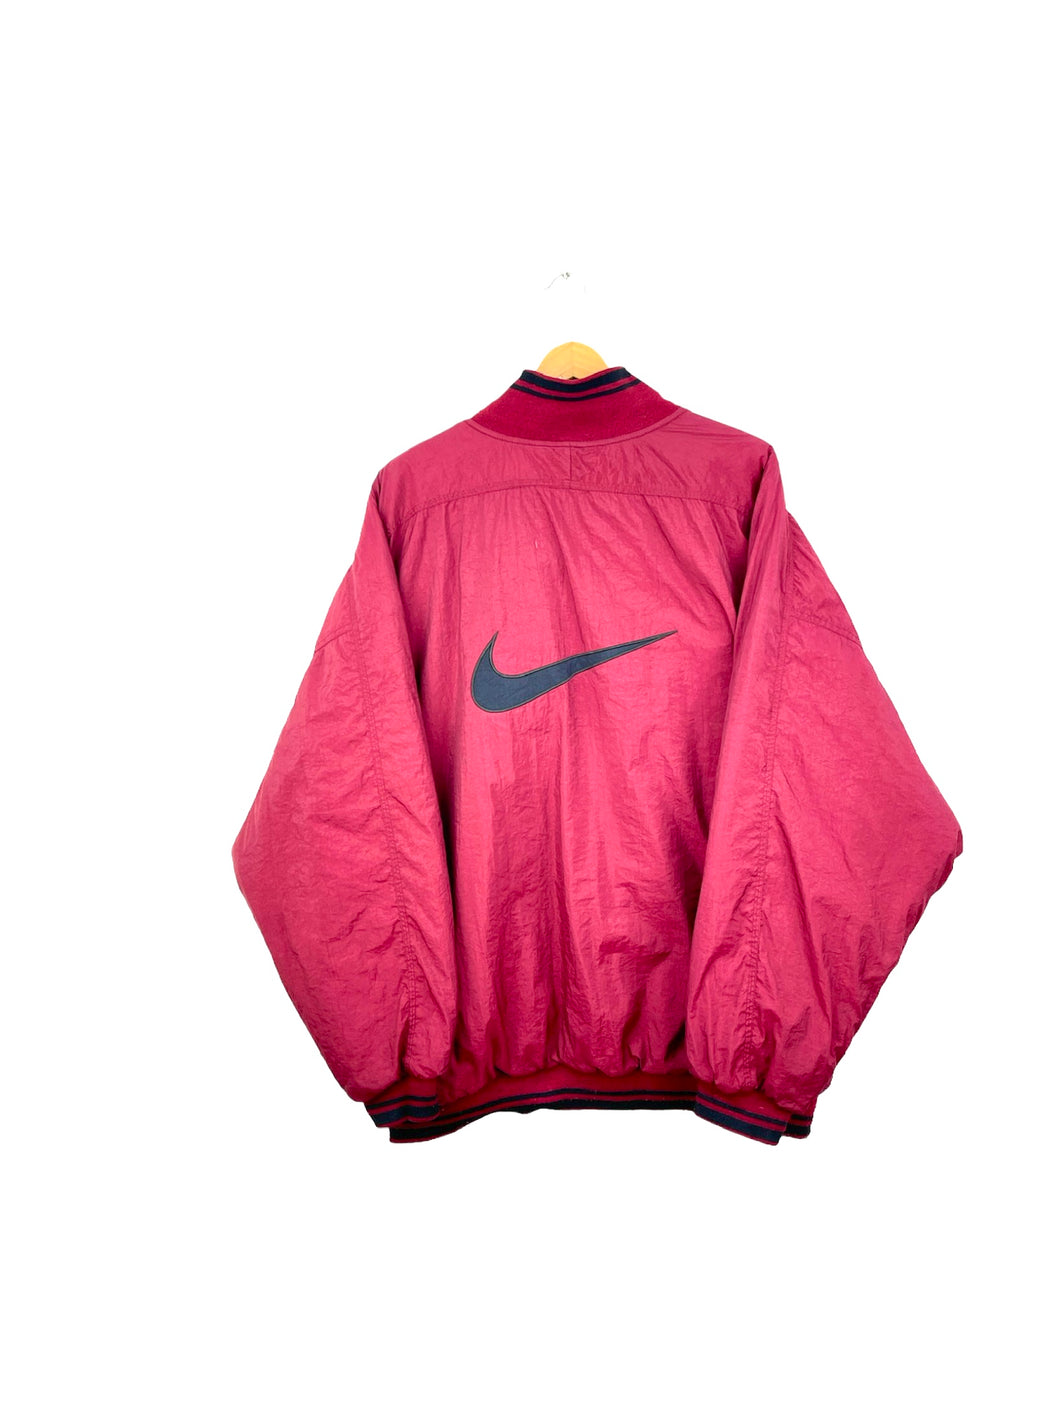 Nike Coat - XXLarge